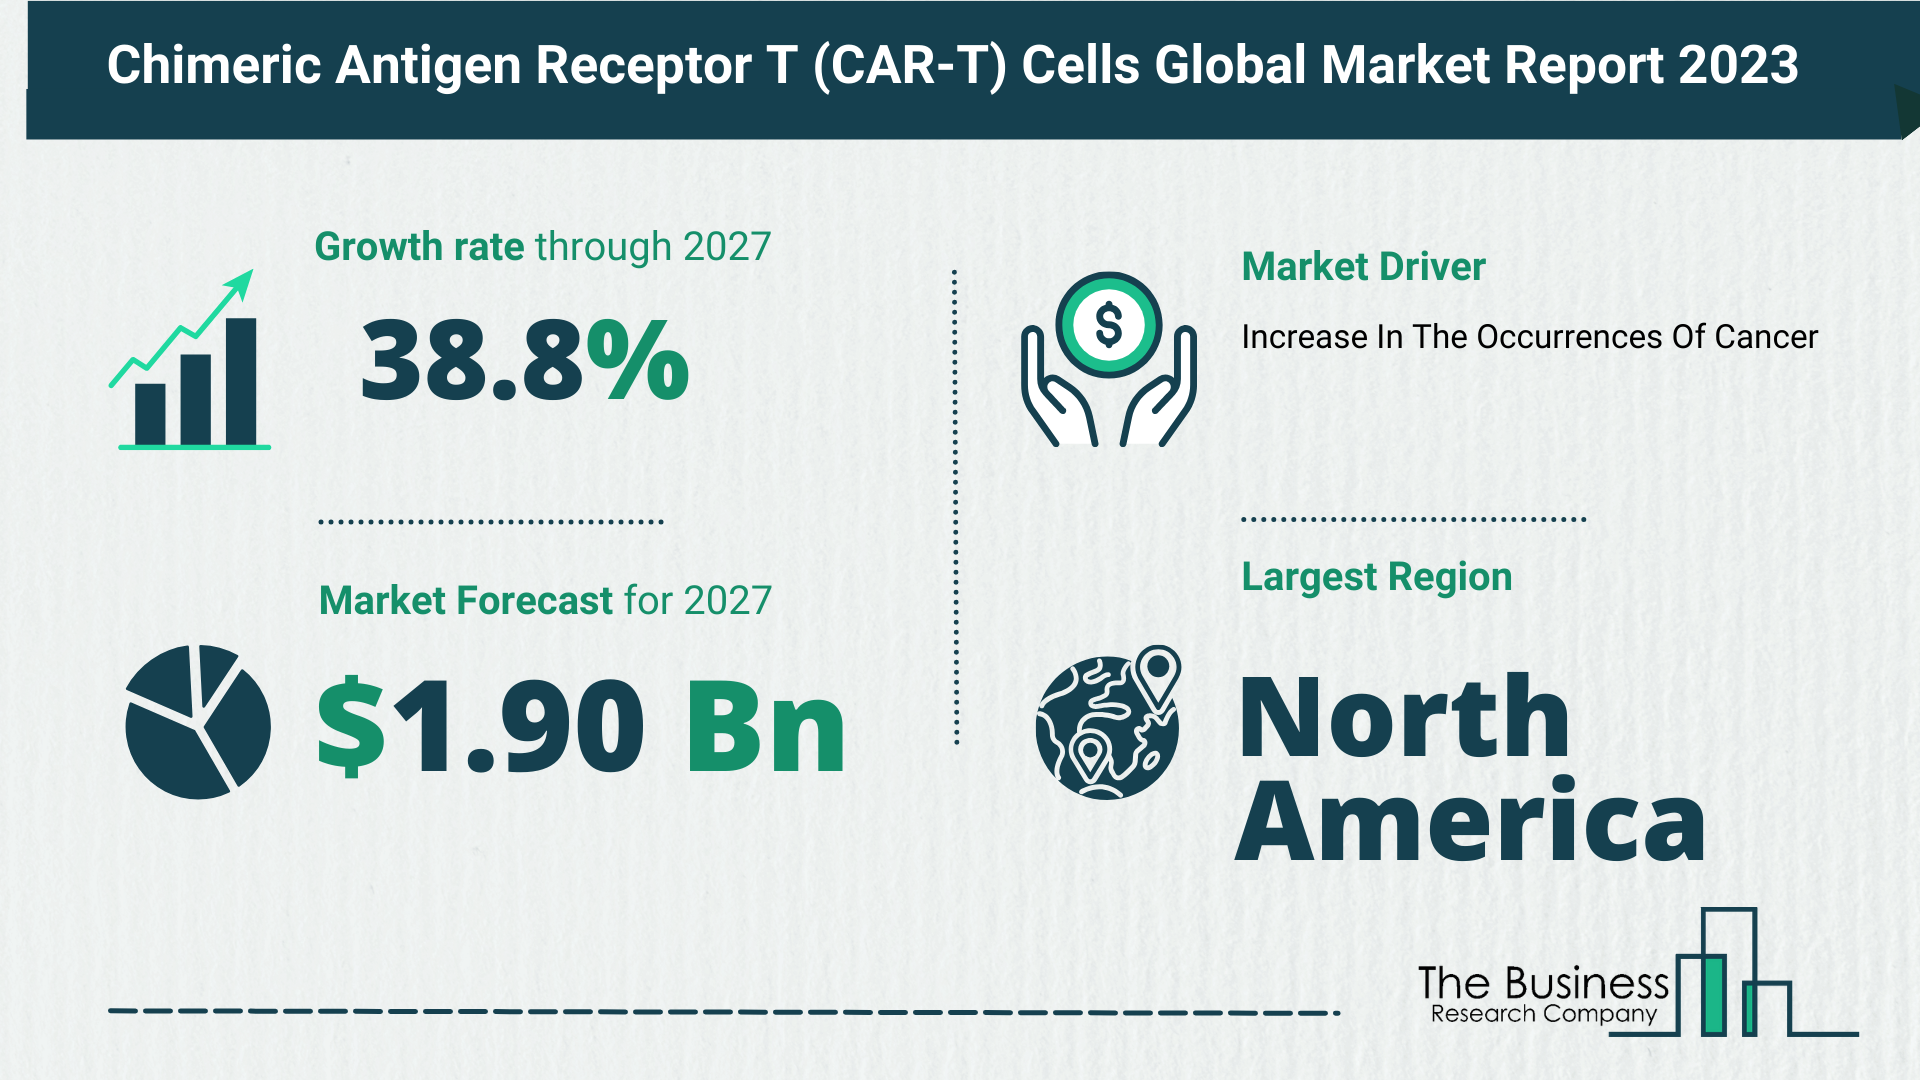 Key Takeaways From The Global Chimeric Antigen Receptor T (CAR-T) Cells Market Forecast 2023